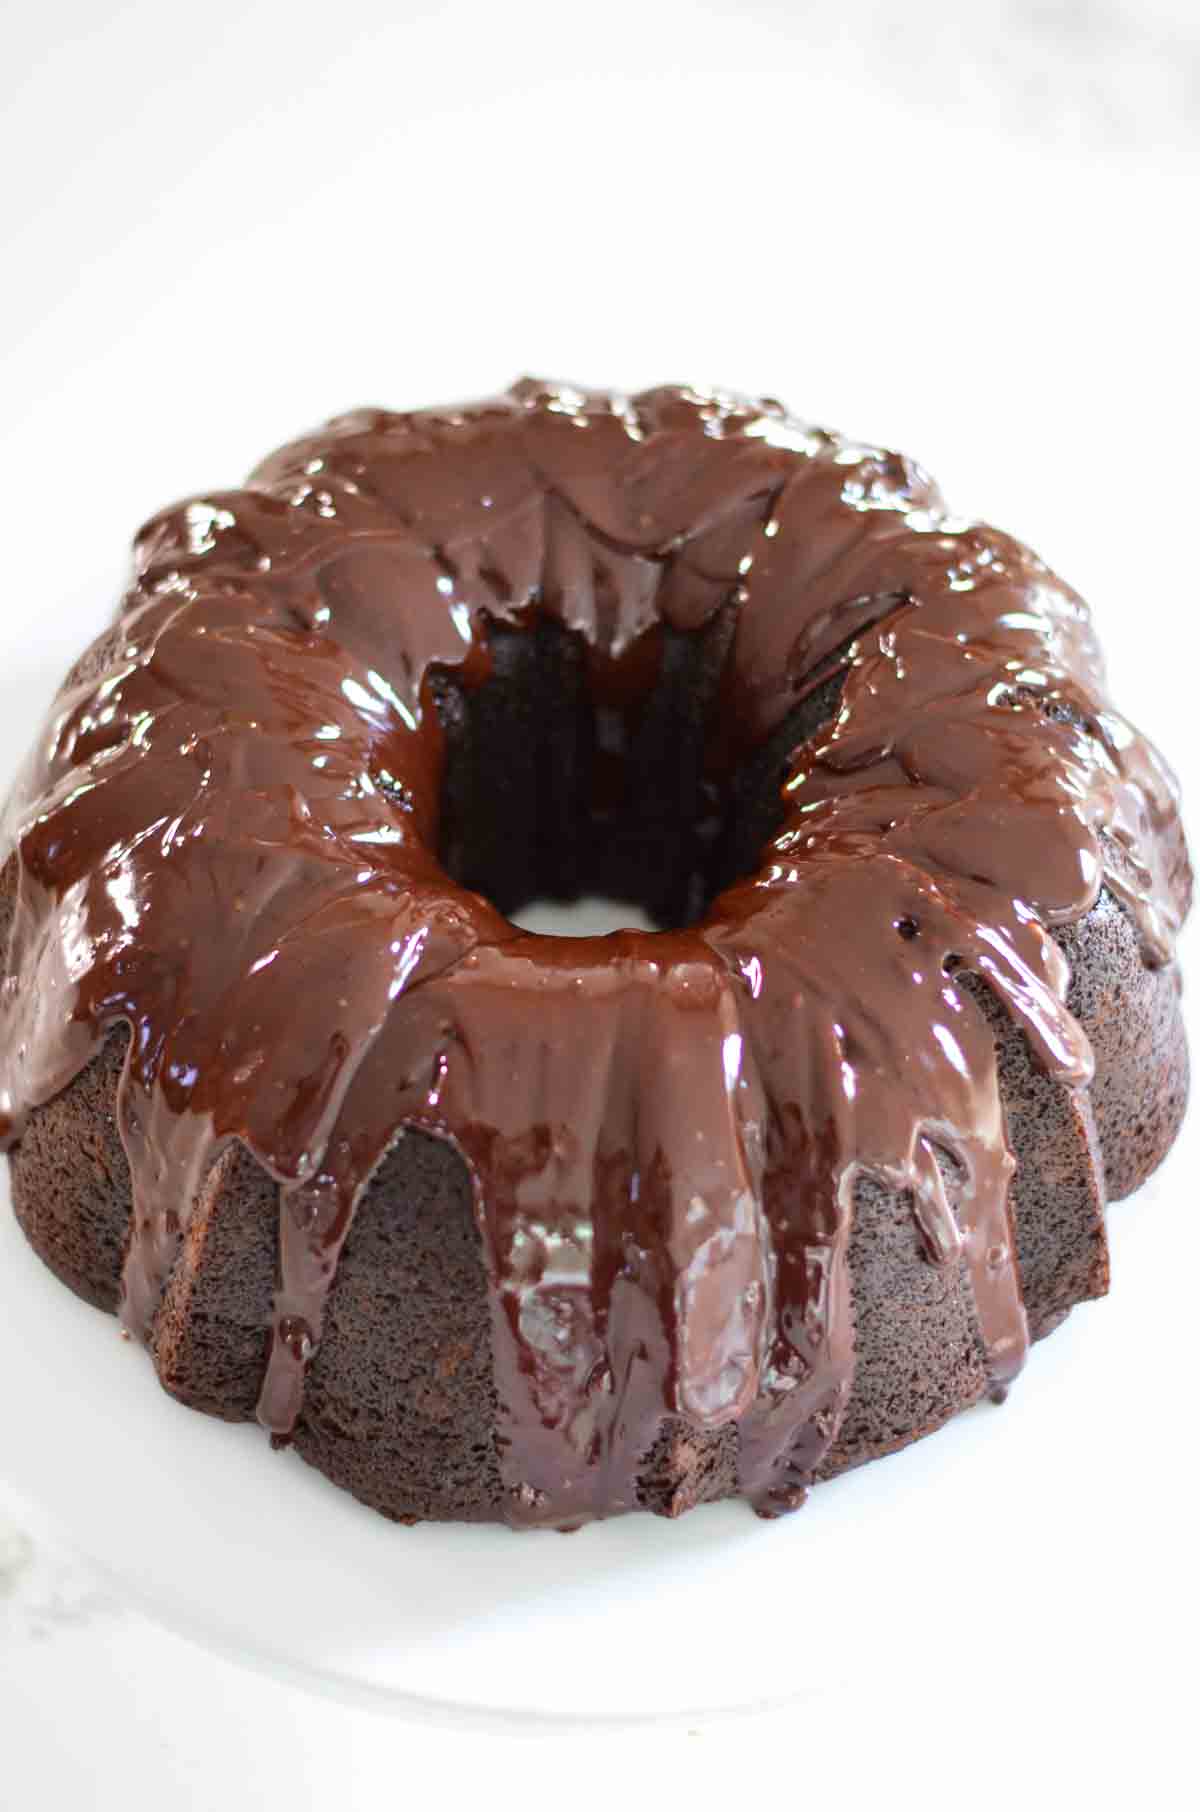 An angled shot of a Chocolate Bundt Cake with Chocolate Glaze on a white cake stand.